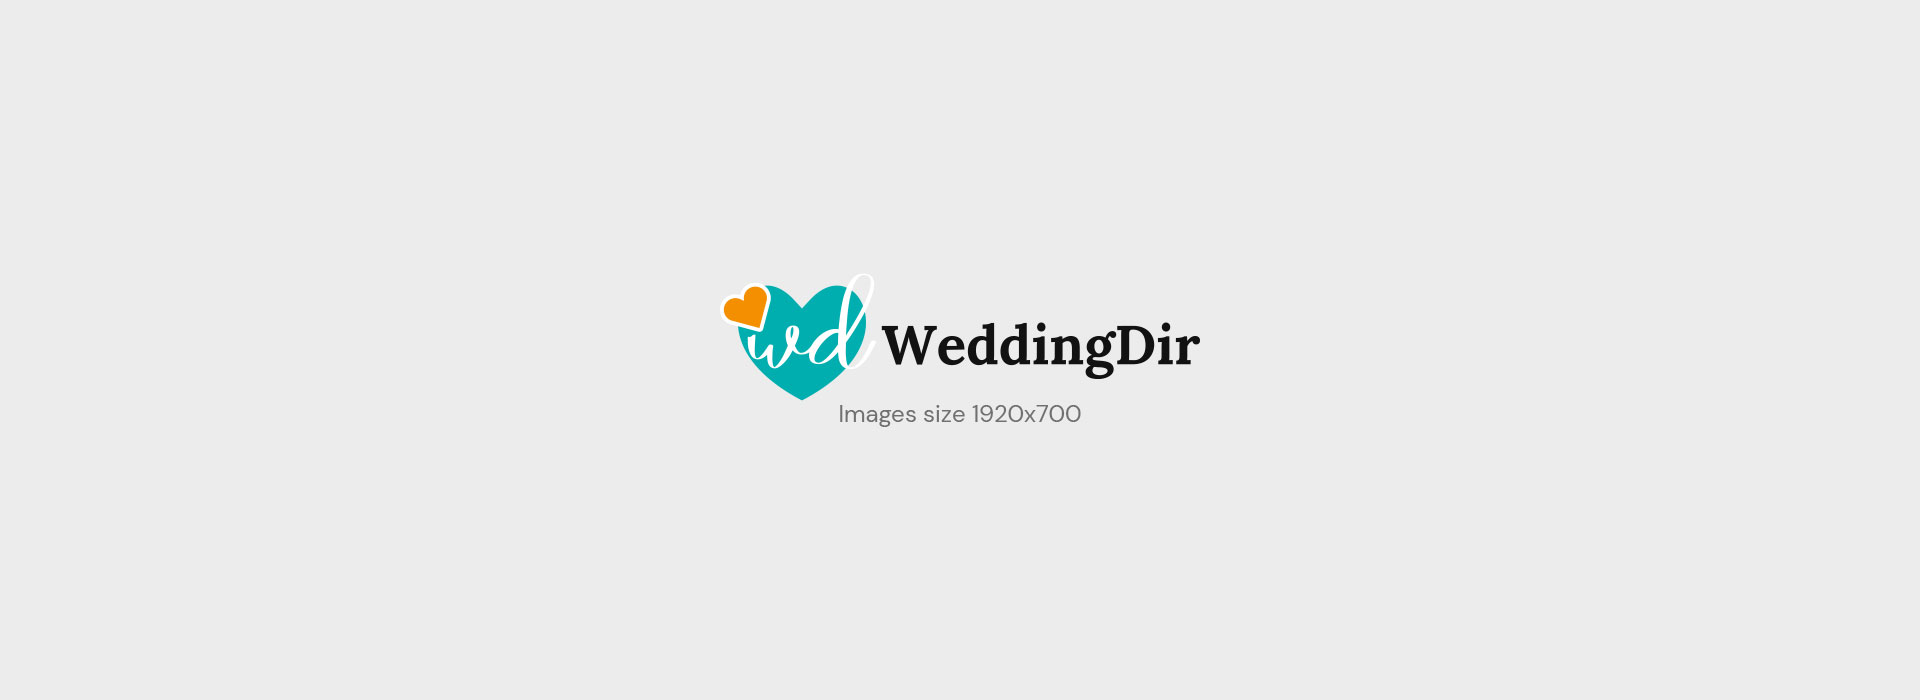 Music Category Vendor Gallery 14 Wedding Music weddingdir slider